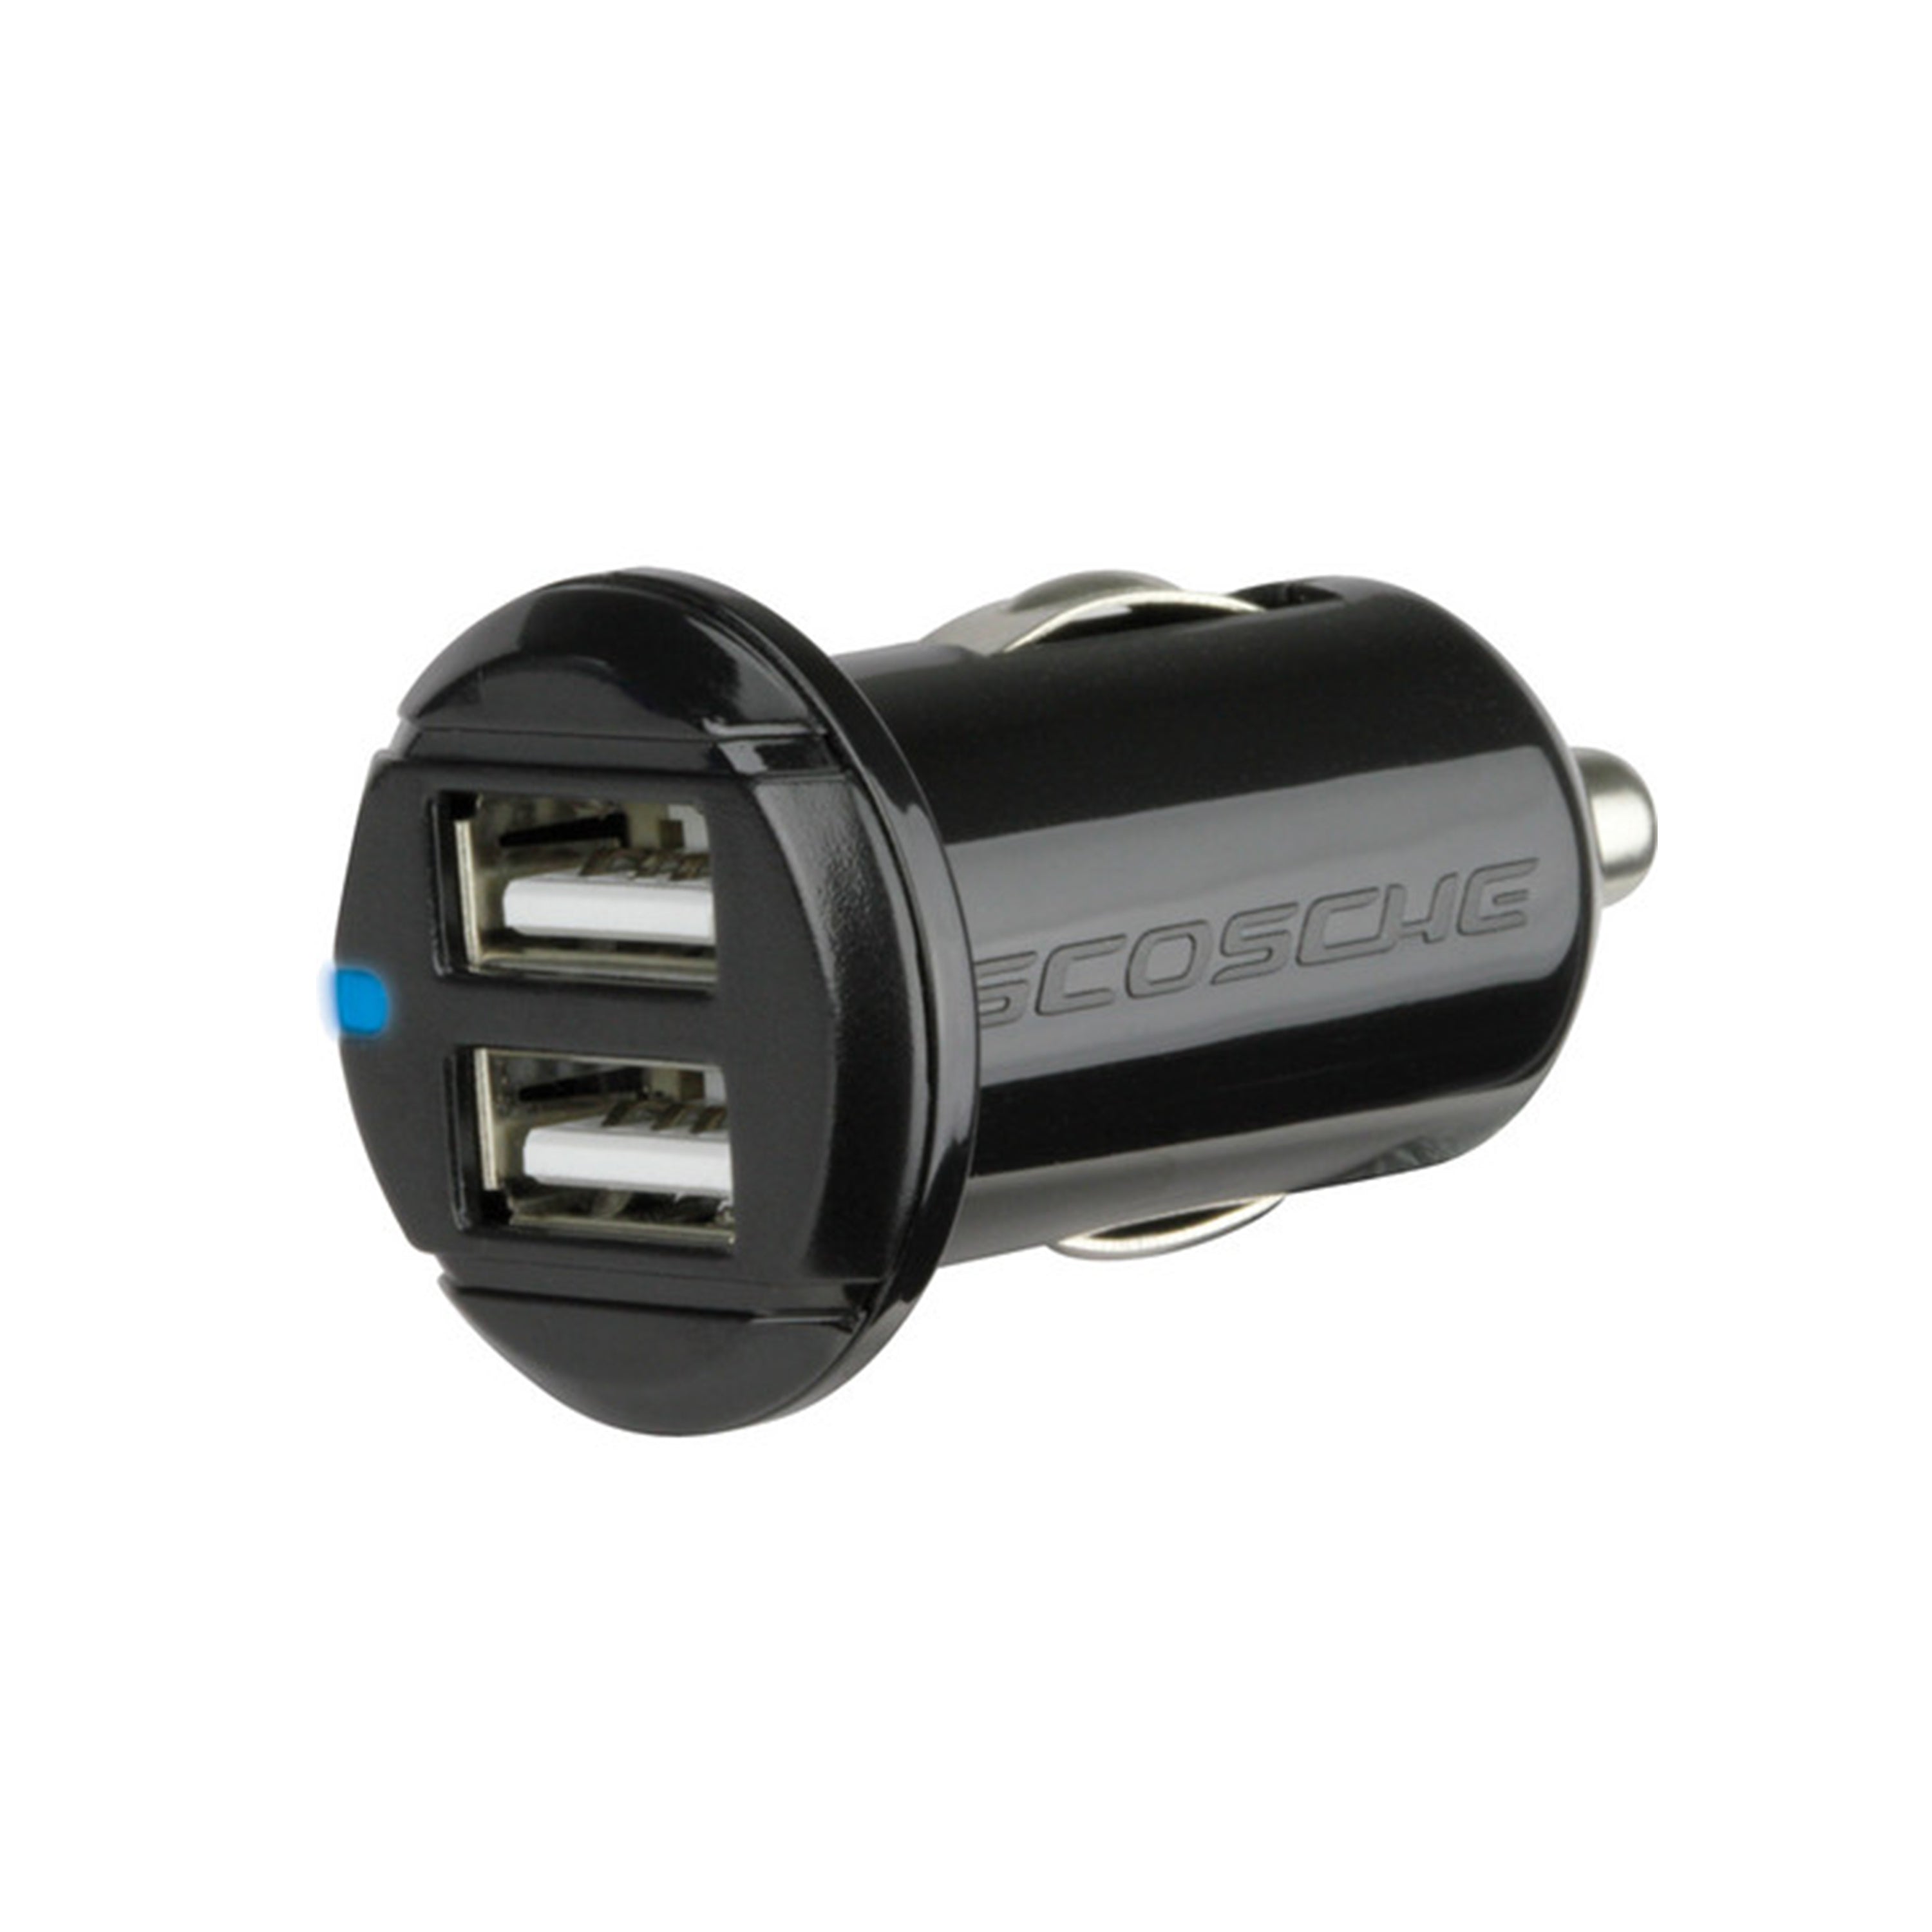 Scosche USBC202M, USB Car Charger - Dual 10 Watt (2.1A) USB Ports (Black)